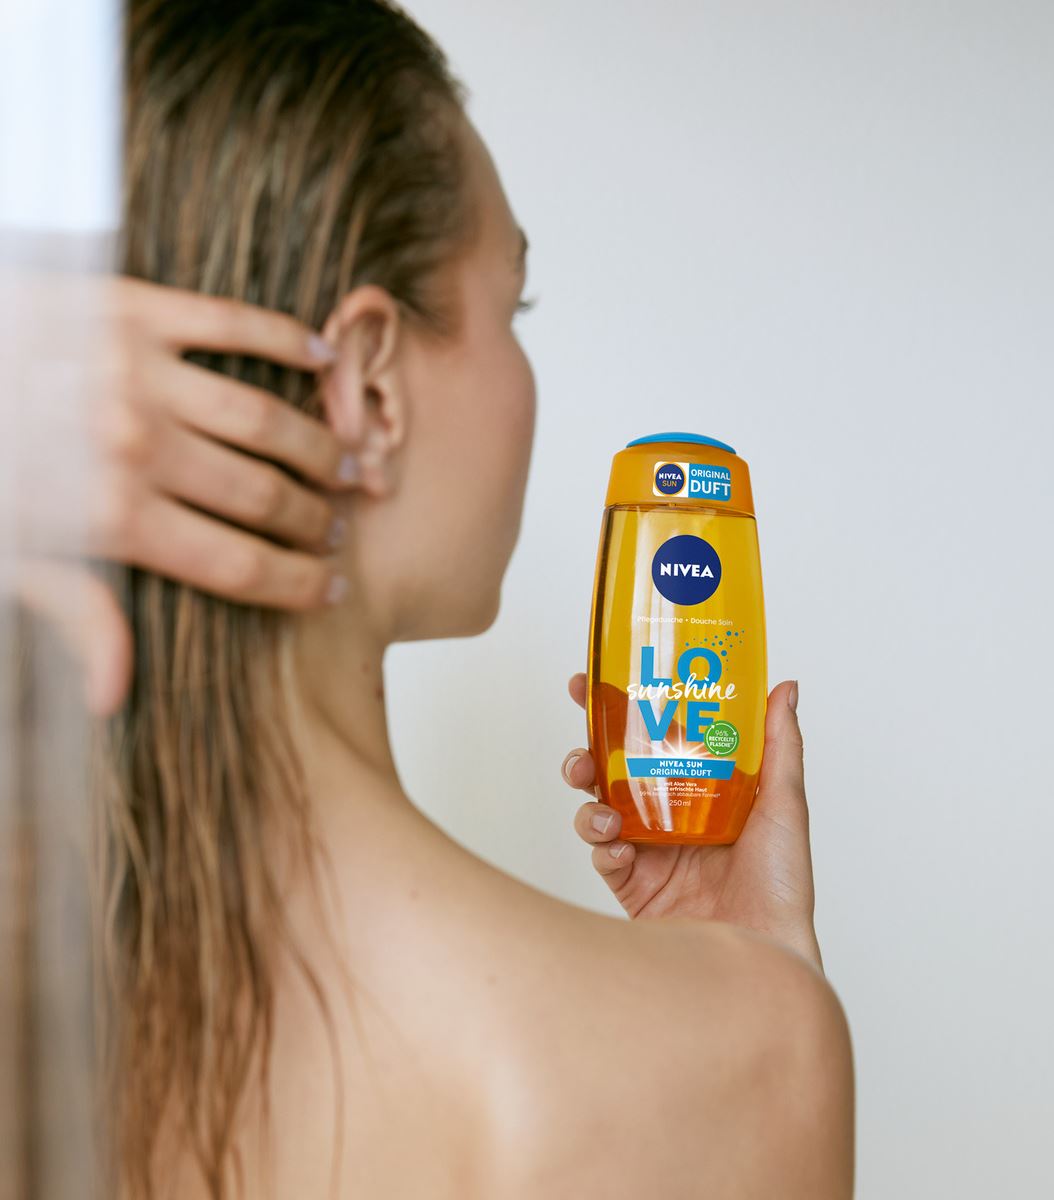 young woman using Nivea LOVE shower gel